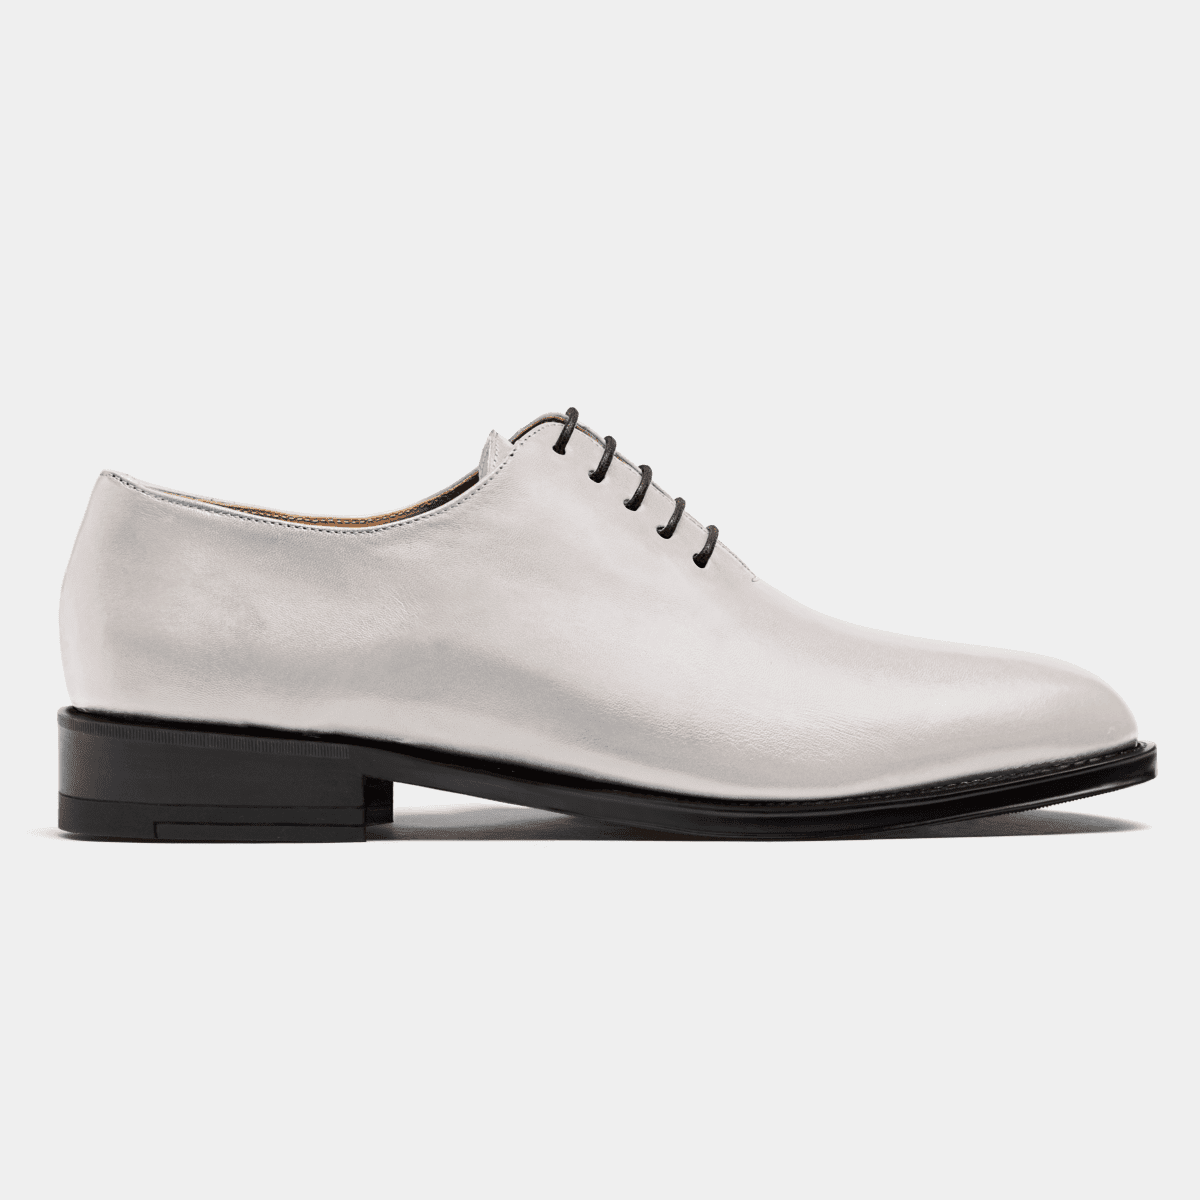 Wholecut Oxford shoes - white italian calf leather